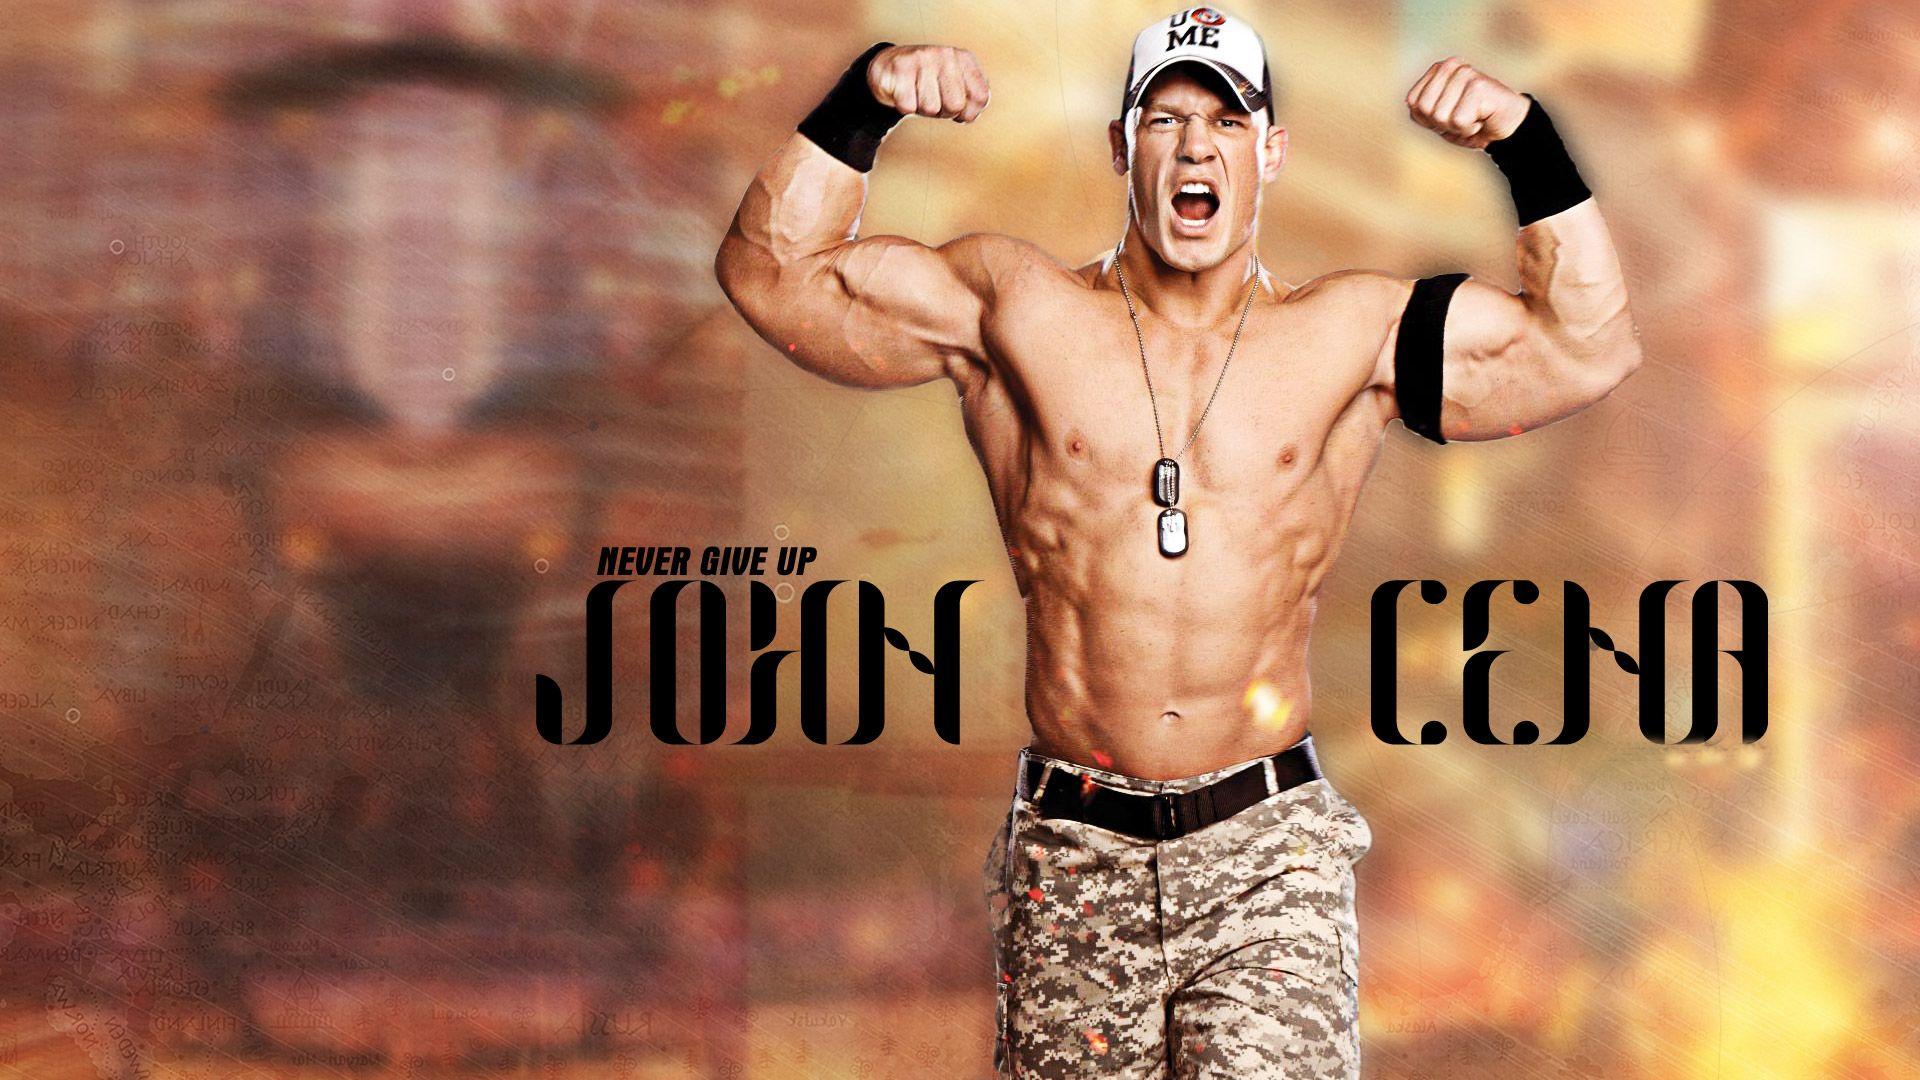 Download Wwe HD Wallpaper John Cena 3D